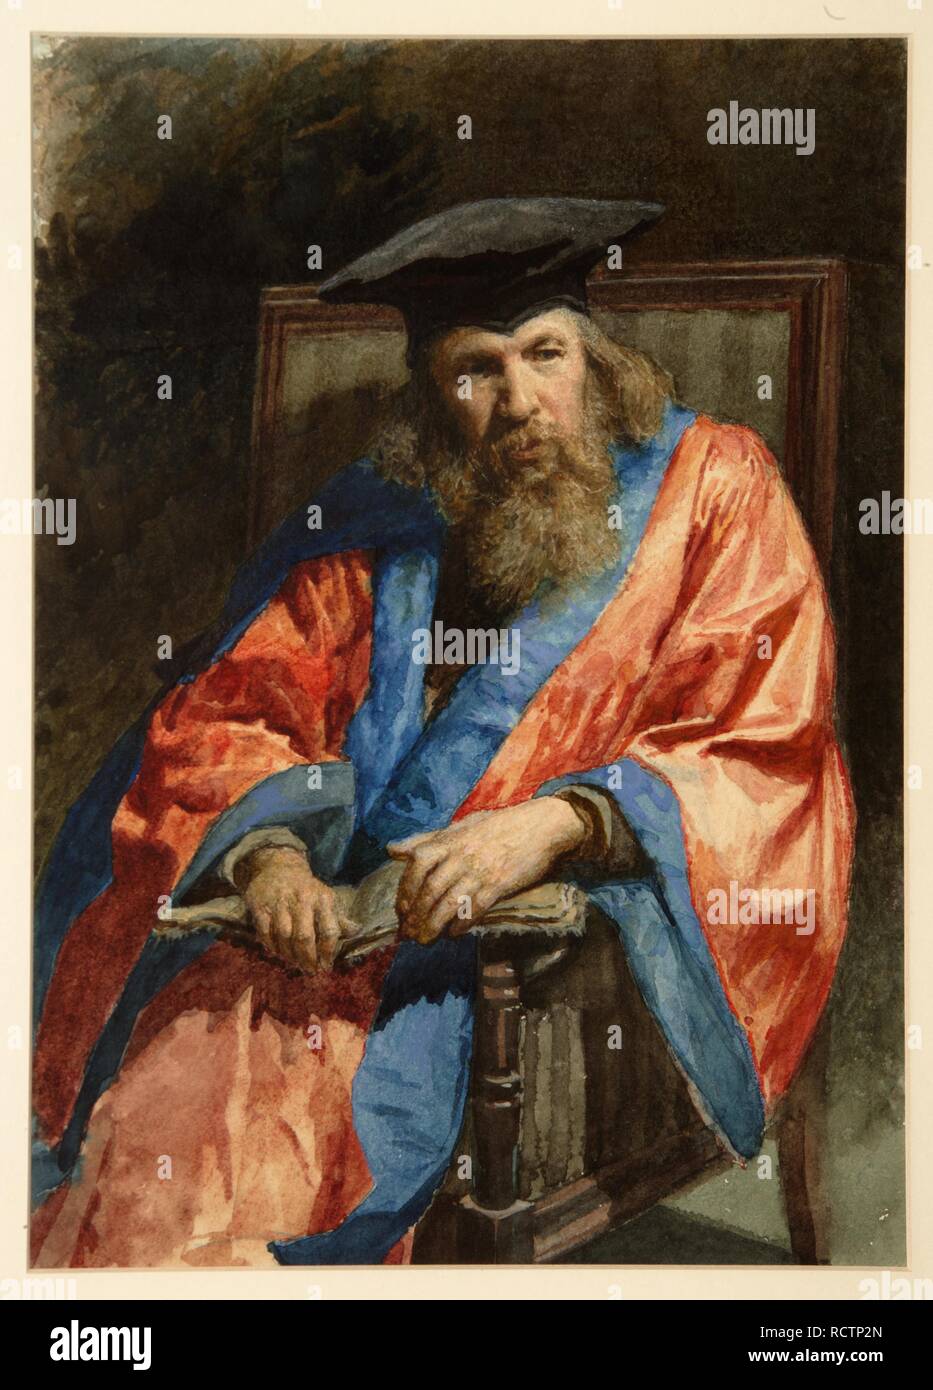 Portrait of Dmitri Mendeleev in the dress of the University of Edinburgh. Museum: State Tretyakov Gallery, Moscow. Author: Yaroshenko, Nikolai Alexandrovich. Stock Photo